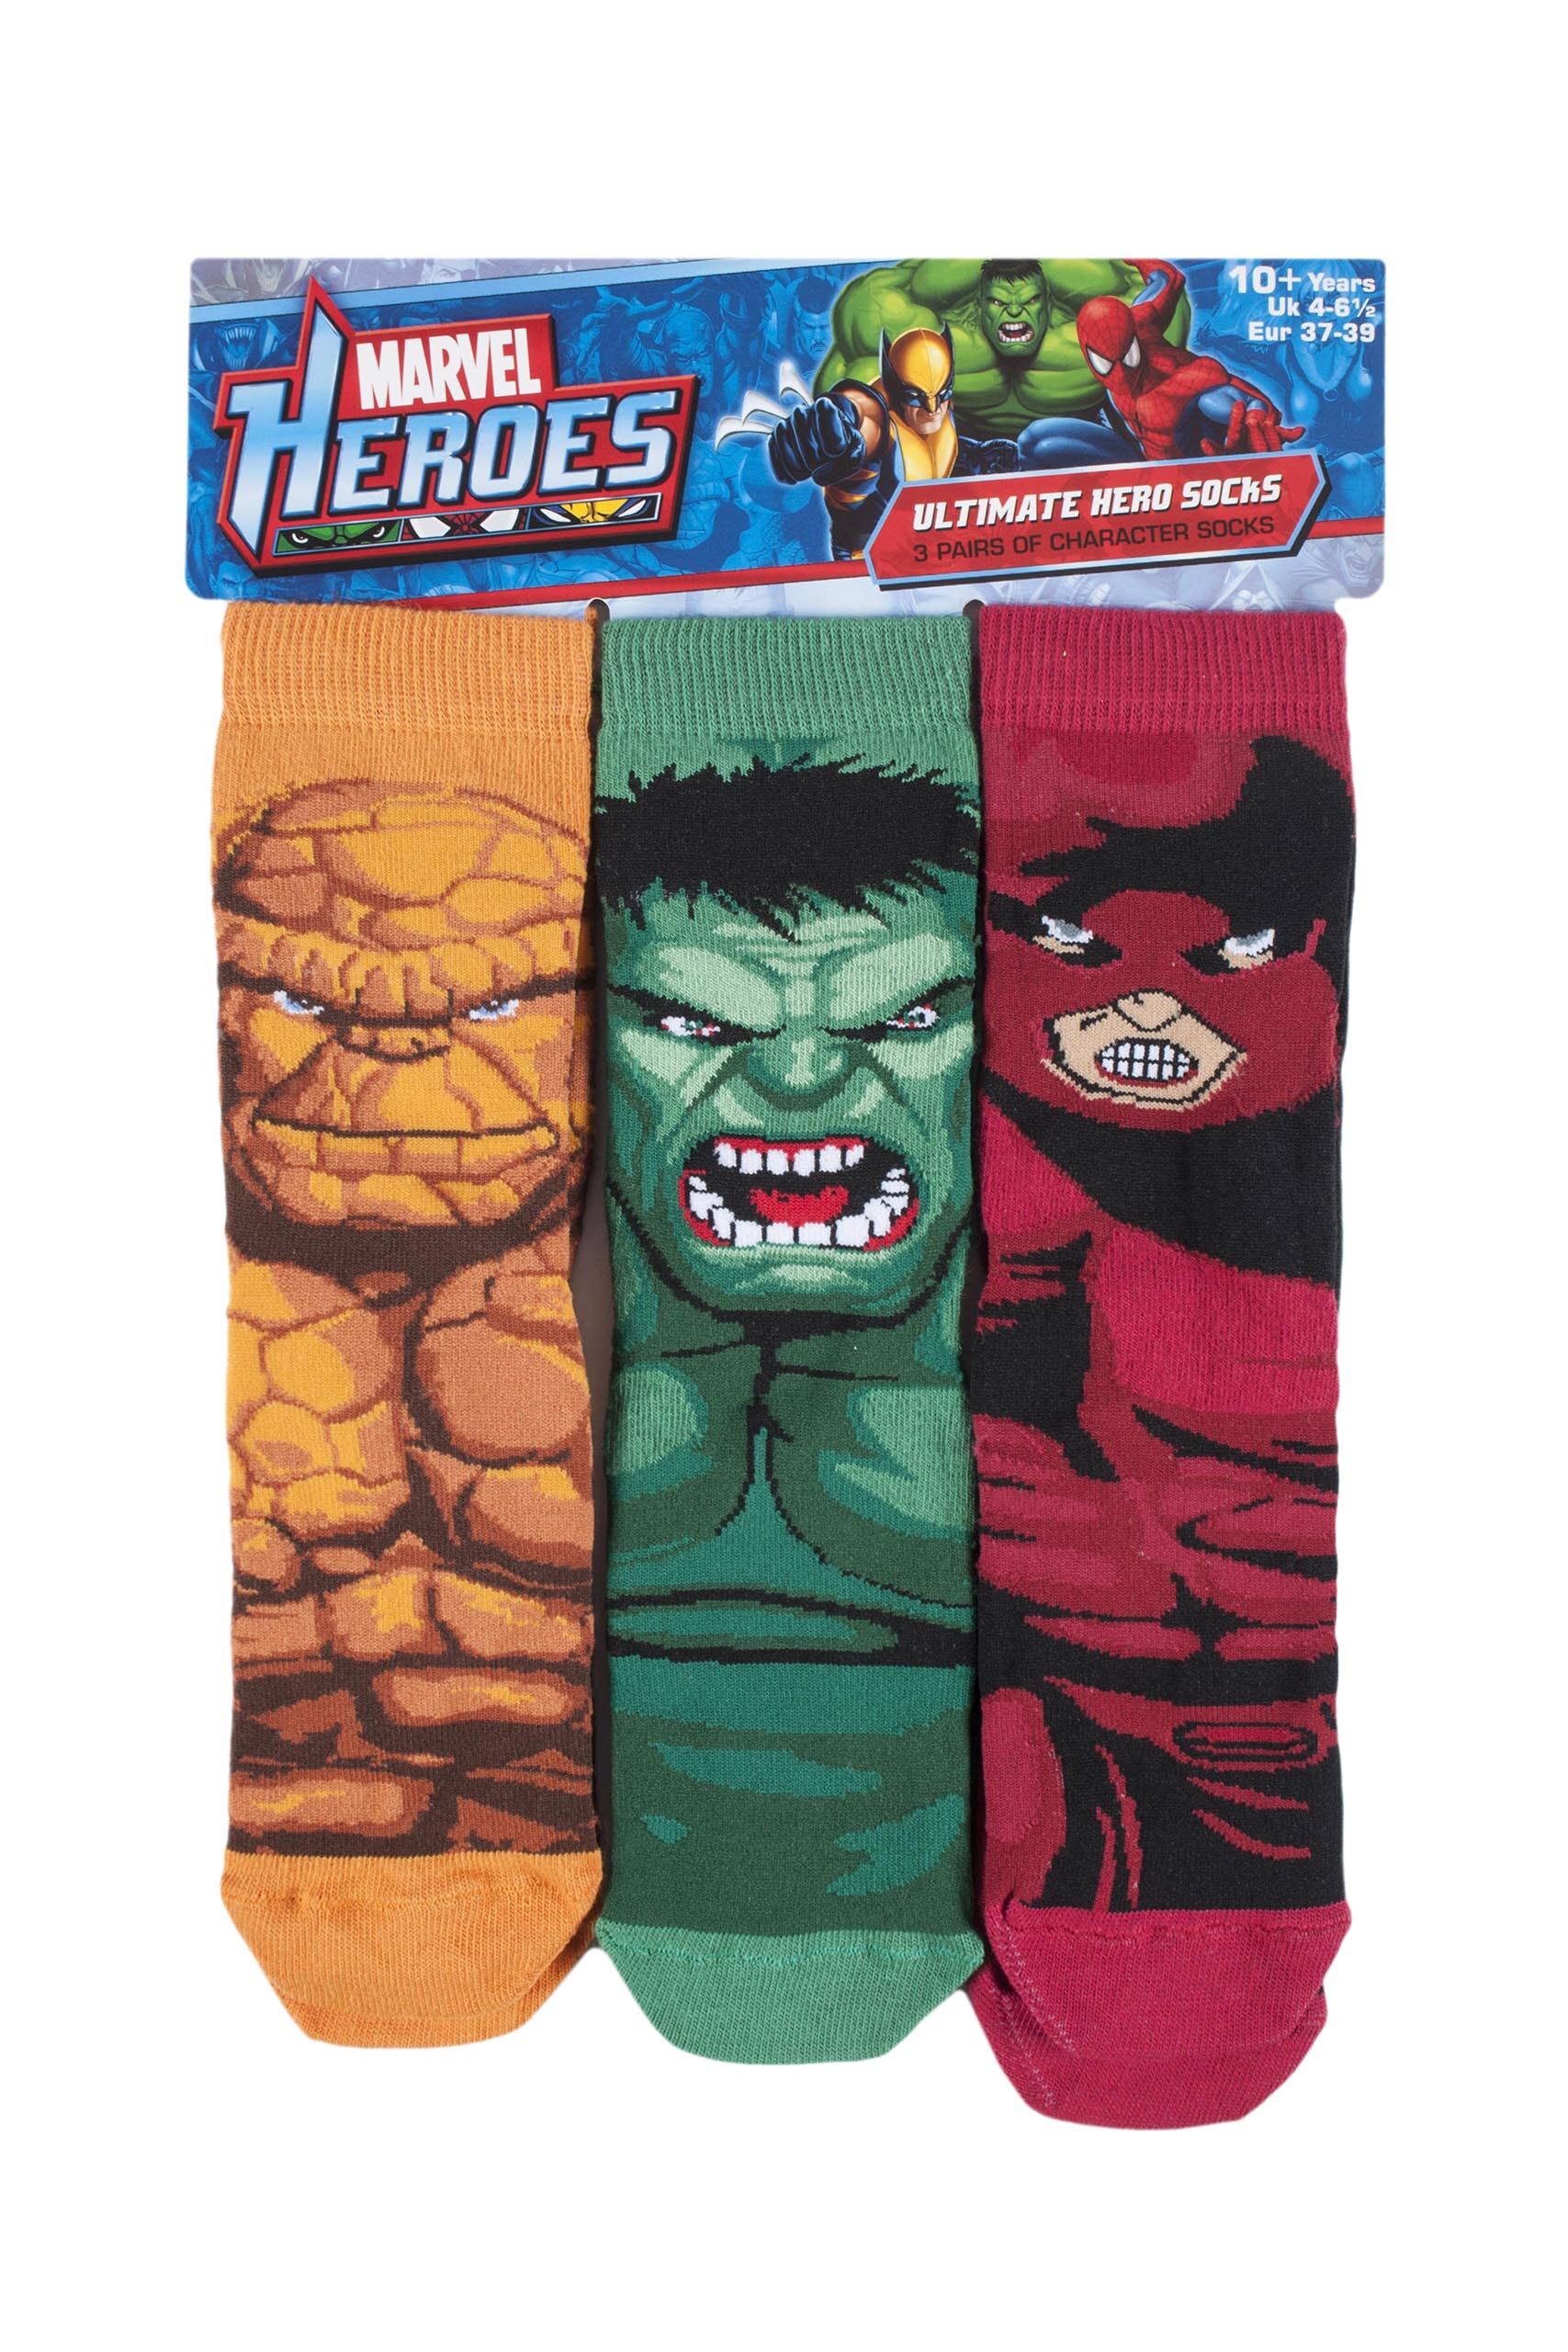 Marvel Heroes Hulk, Juggernaut & Thing | SockShop